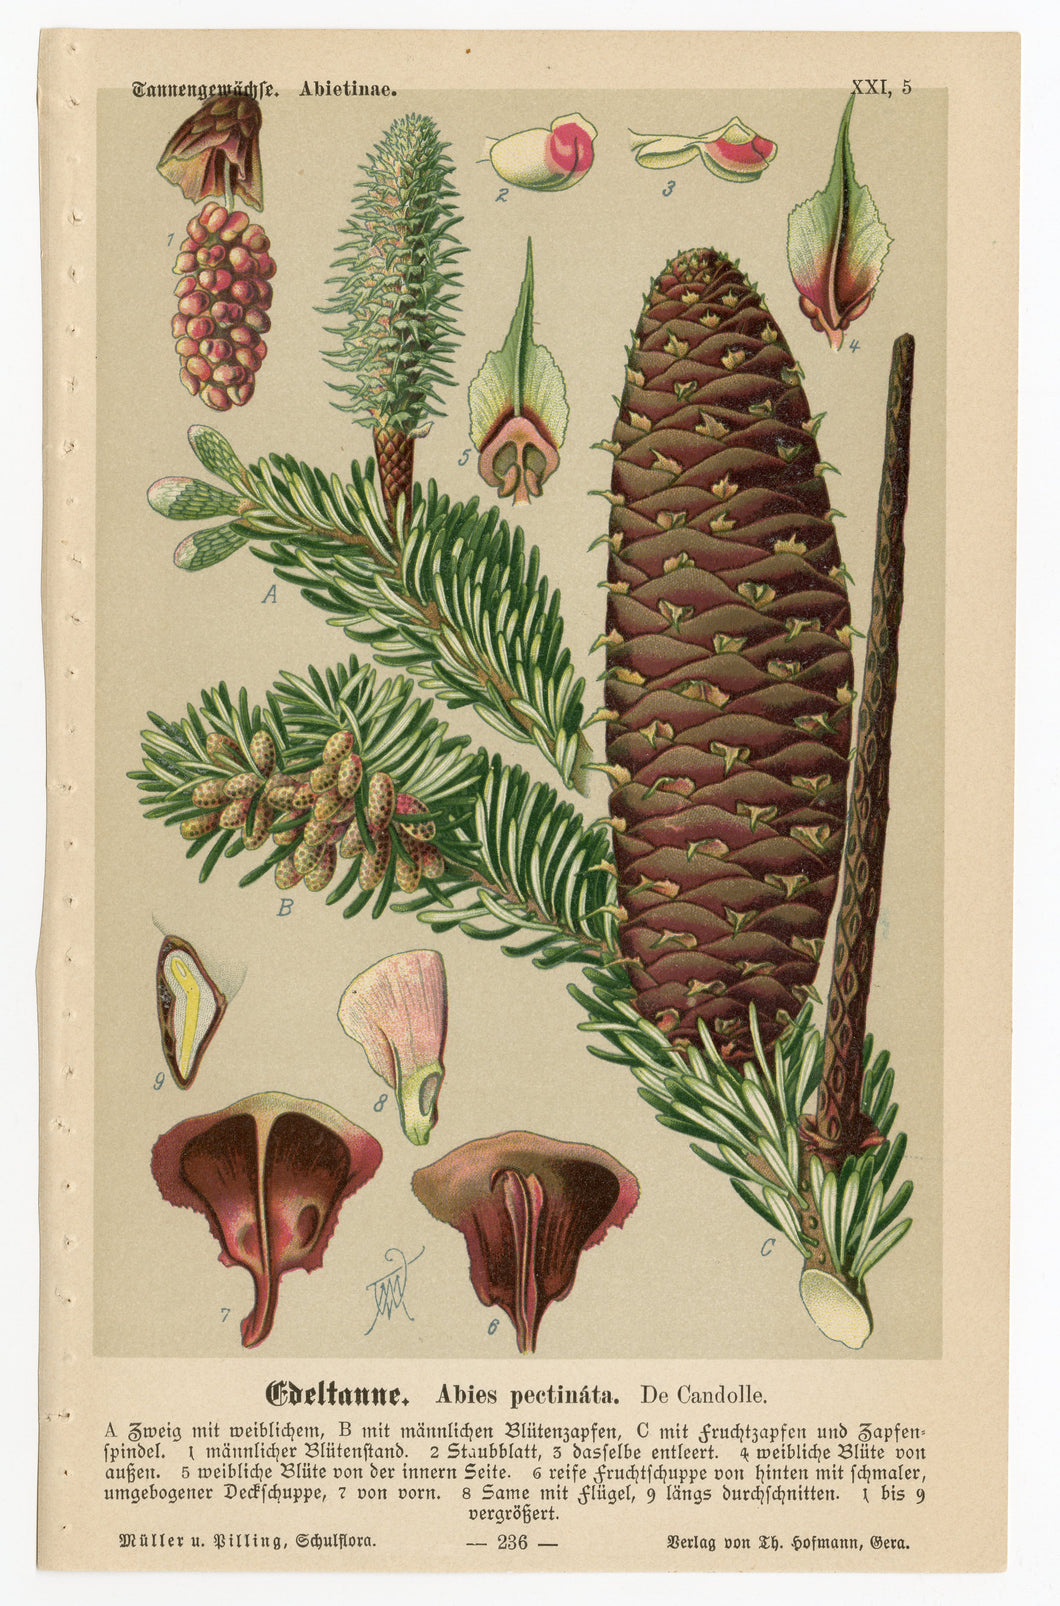 Antique German Nature ABIES PECTINATA Illustrated Book Page, Print, Pine Cones, Trees